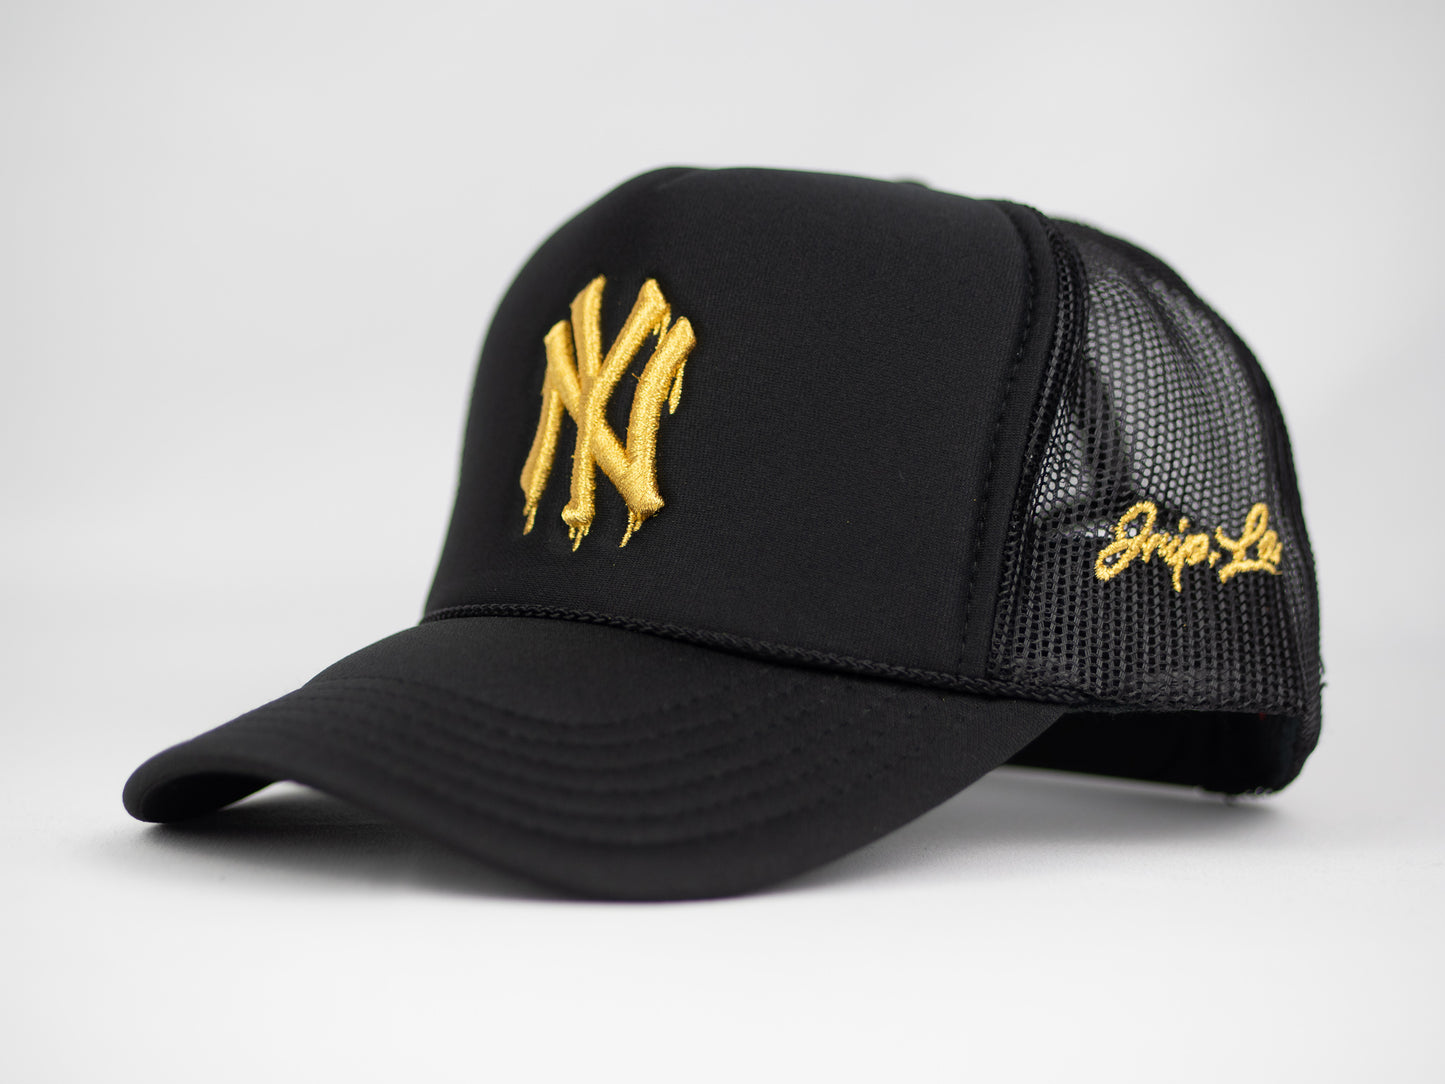 NY Gold Dripping Trucker Hat (BLACK)